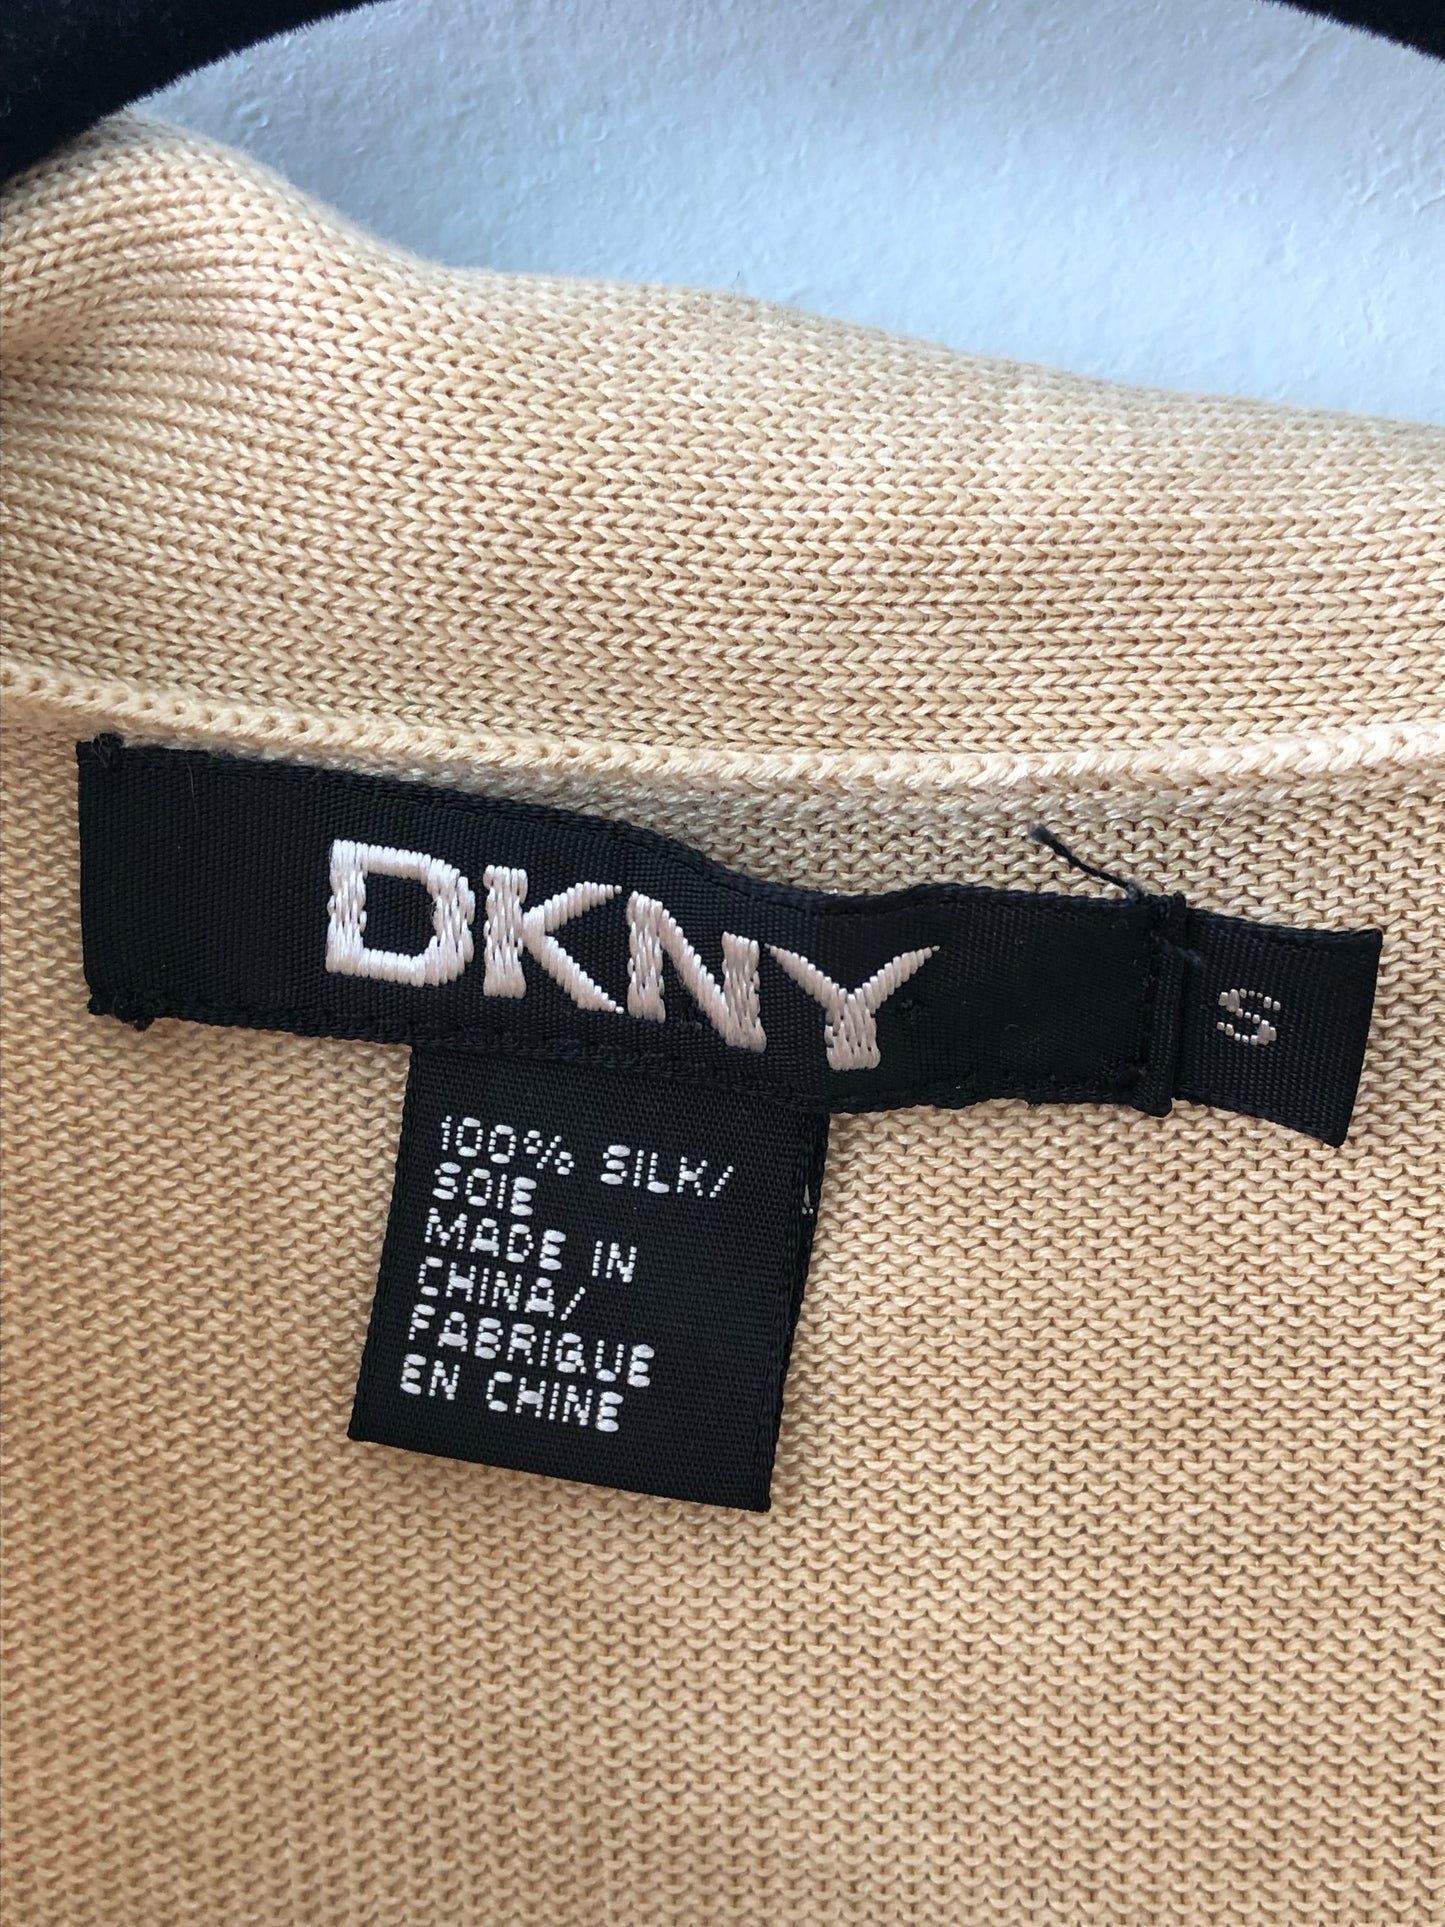 DKNY vest